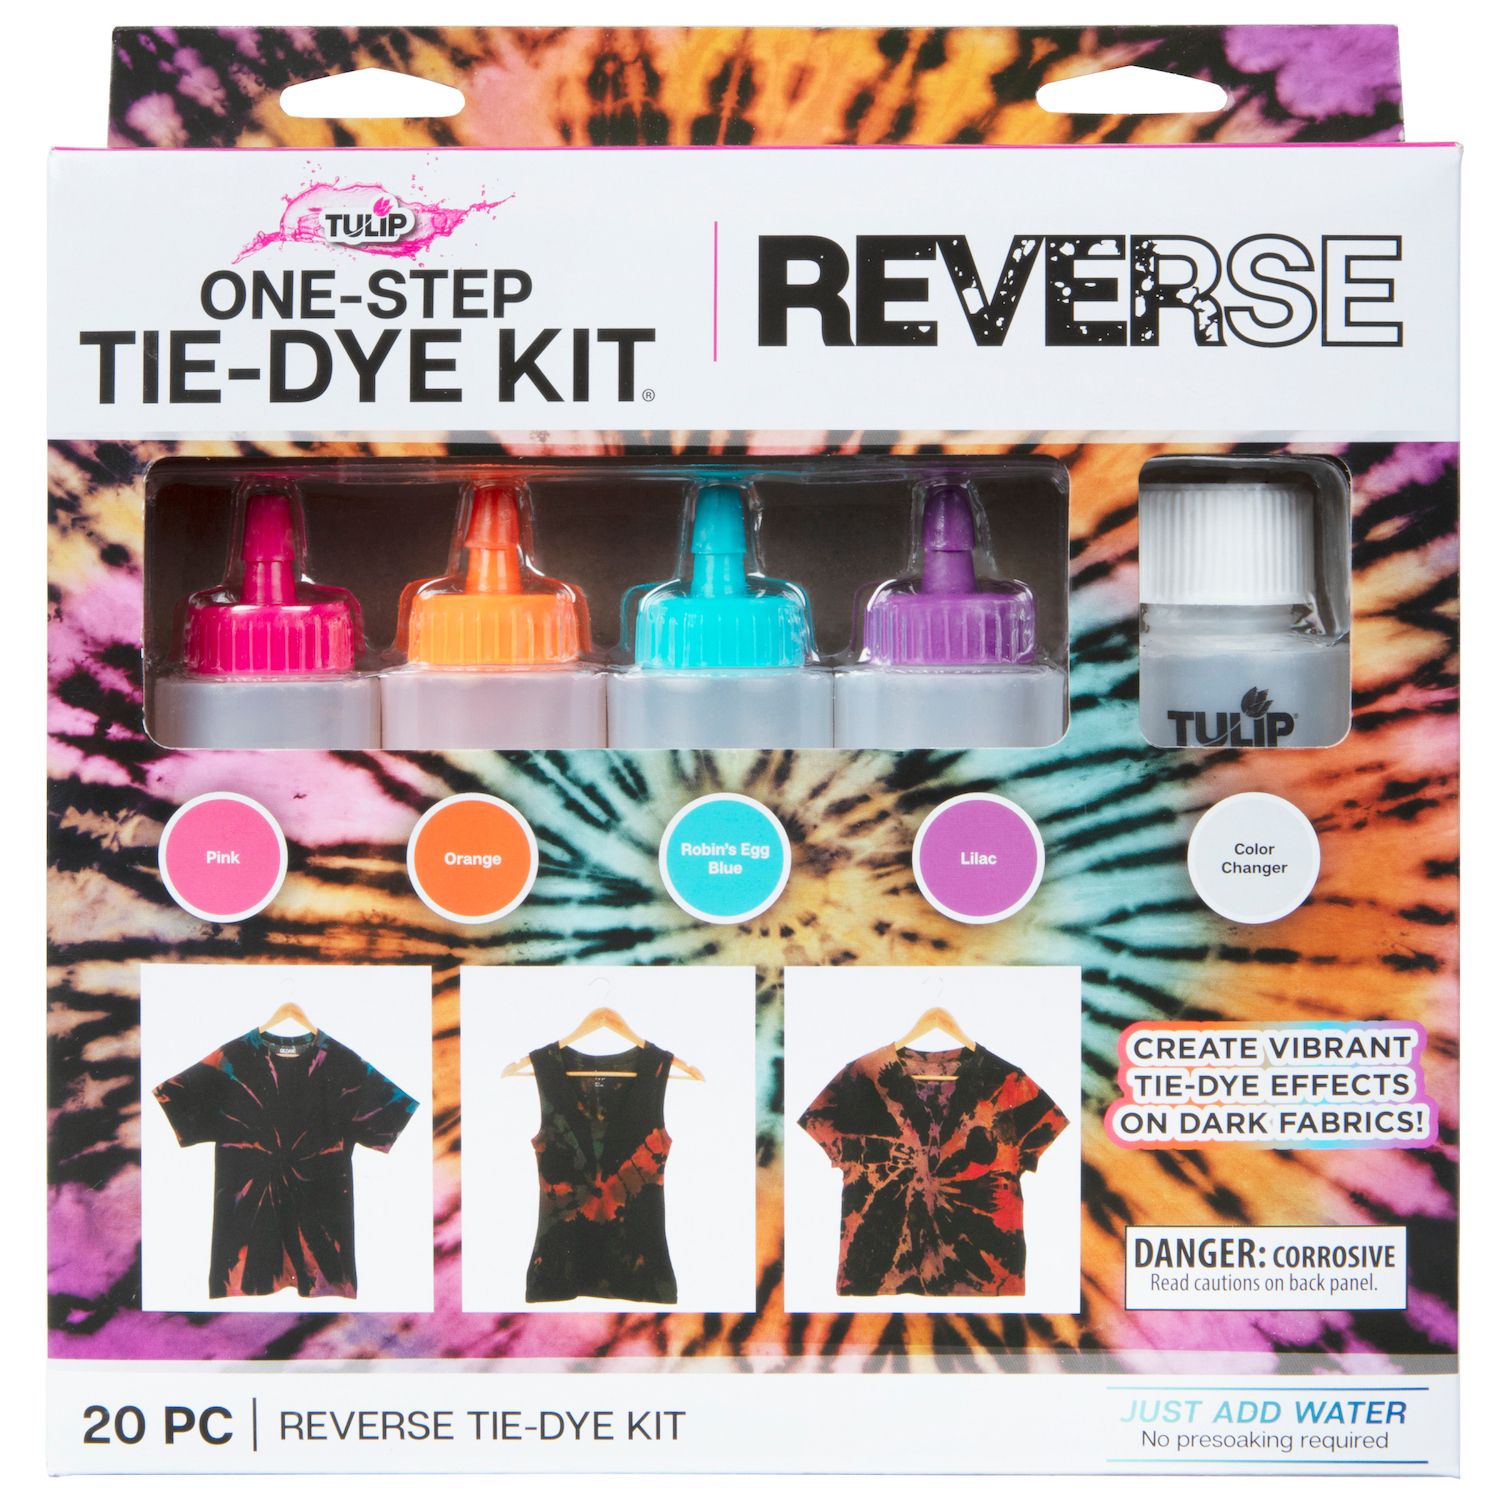 Tie Dye Kits for Adults